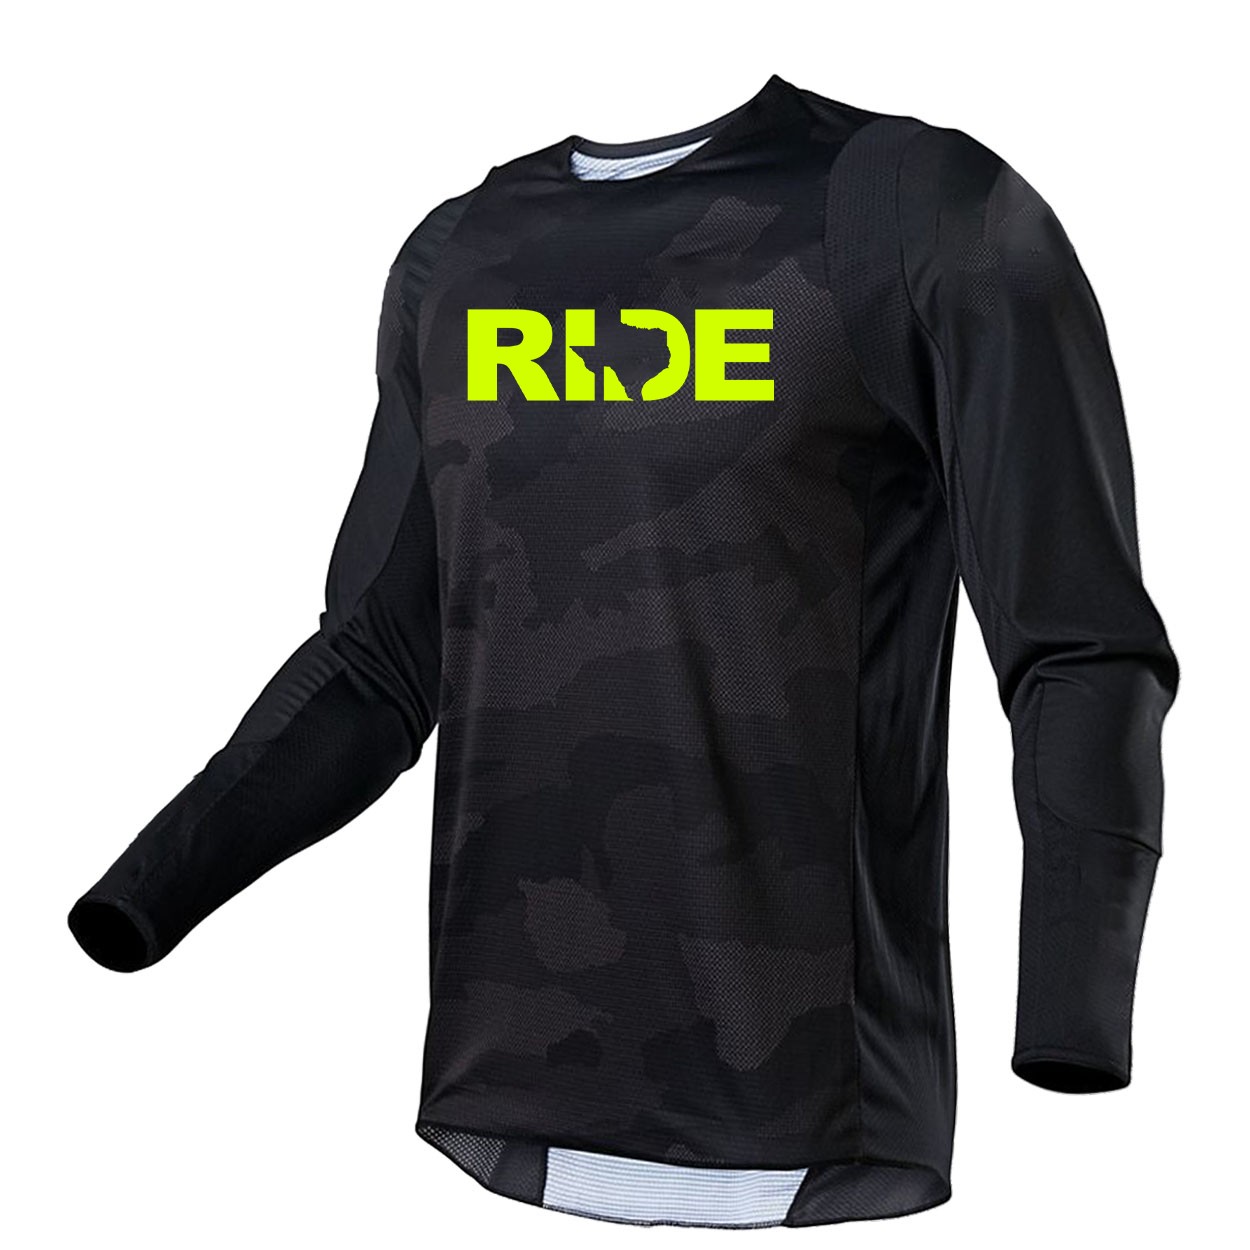 Ride Texas Classic Performance Jersey Long Sleeve Shirt Black Camo (Hi-Vis Logo)